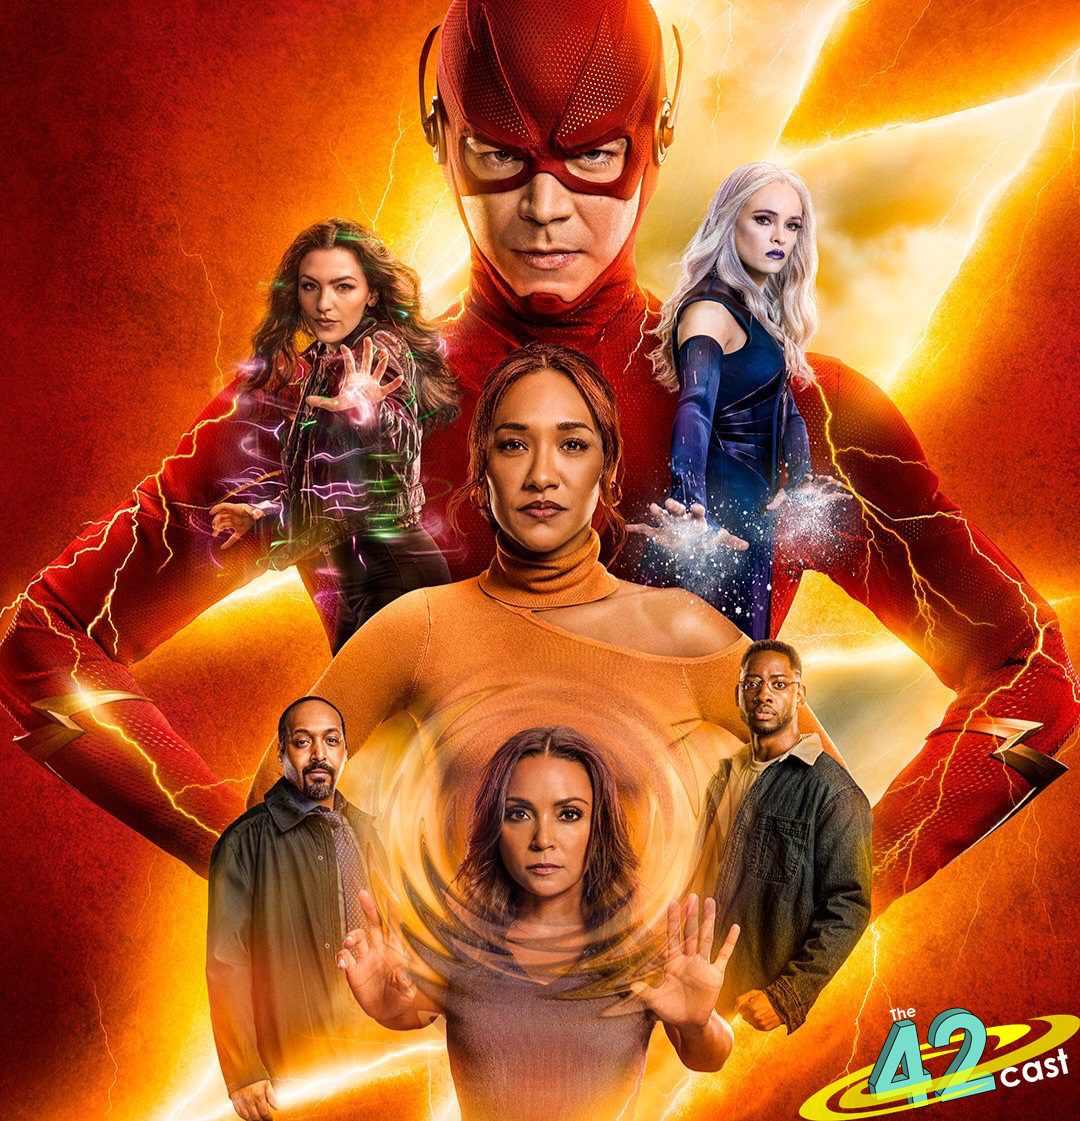 The Flash Season 8